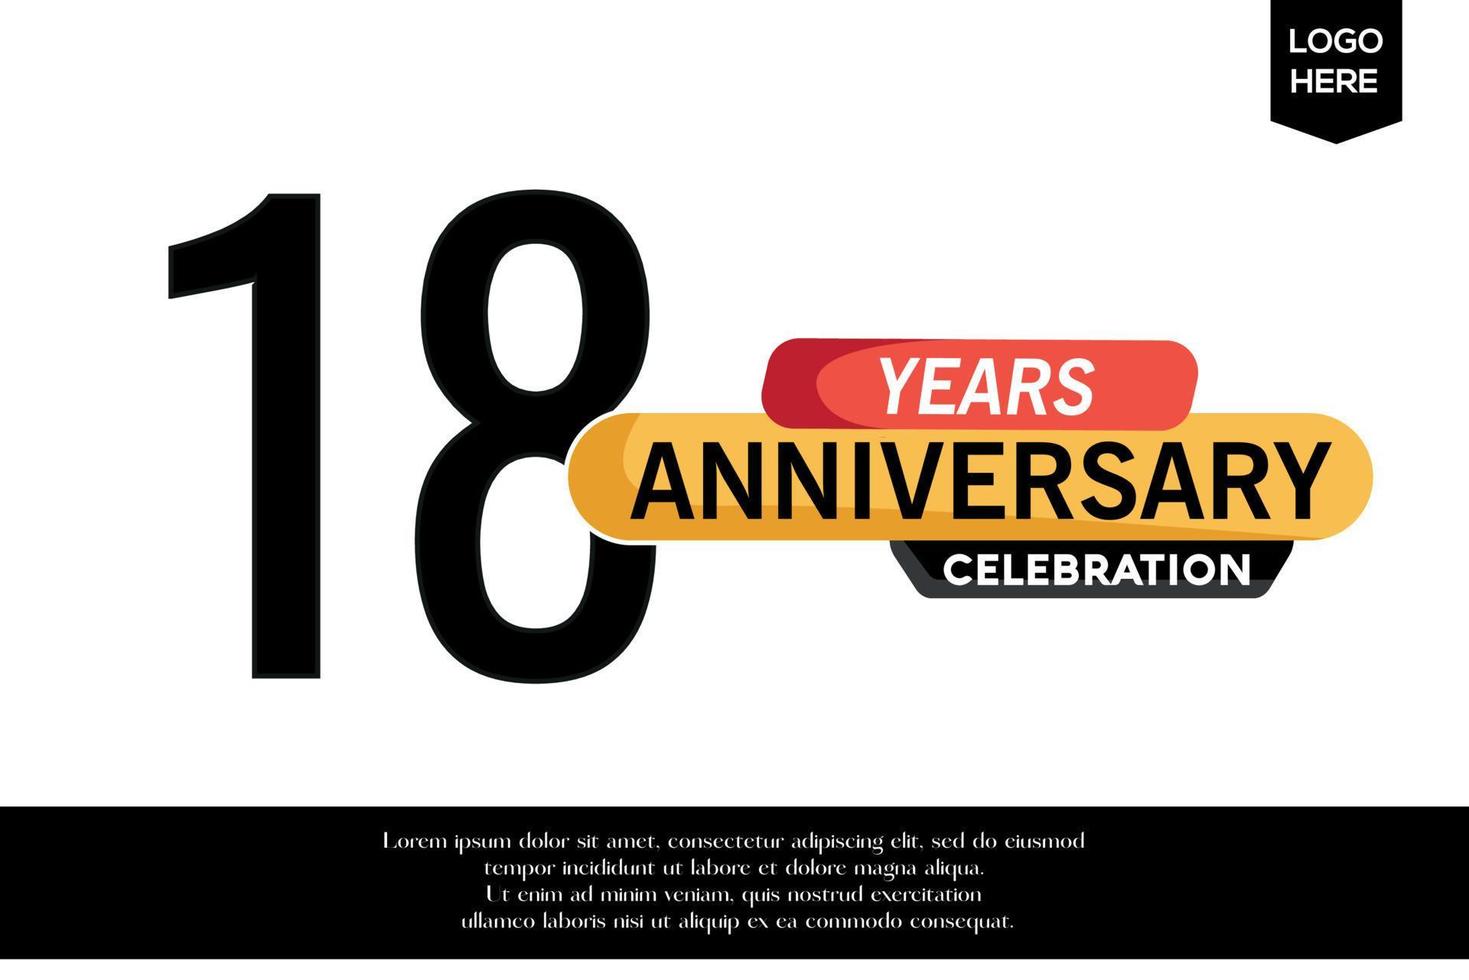 18 aniversario celebracion logotipo negro amarillo de colores con texto en gris color aislado en blanco antecedentes vector modelo diseño